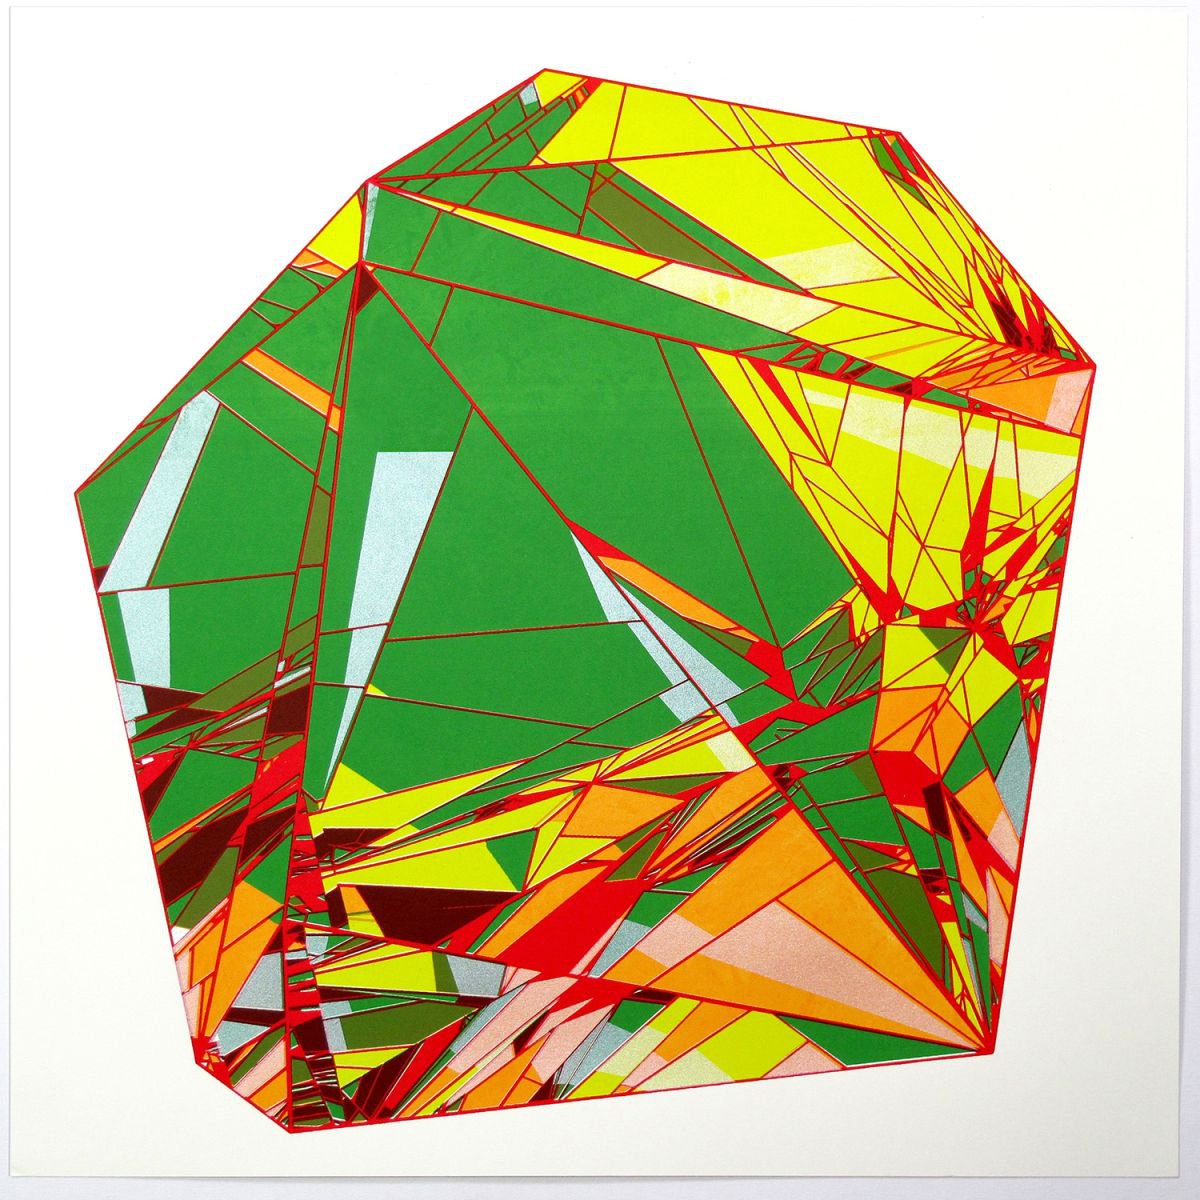 Fractured Crystal by Chris Keegan